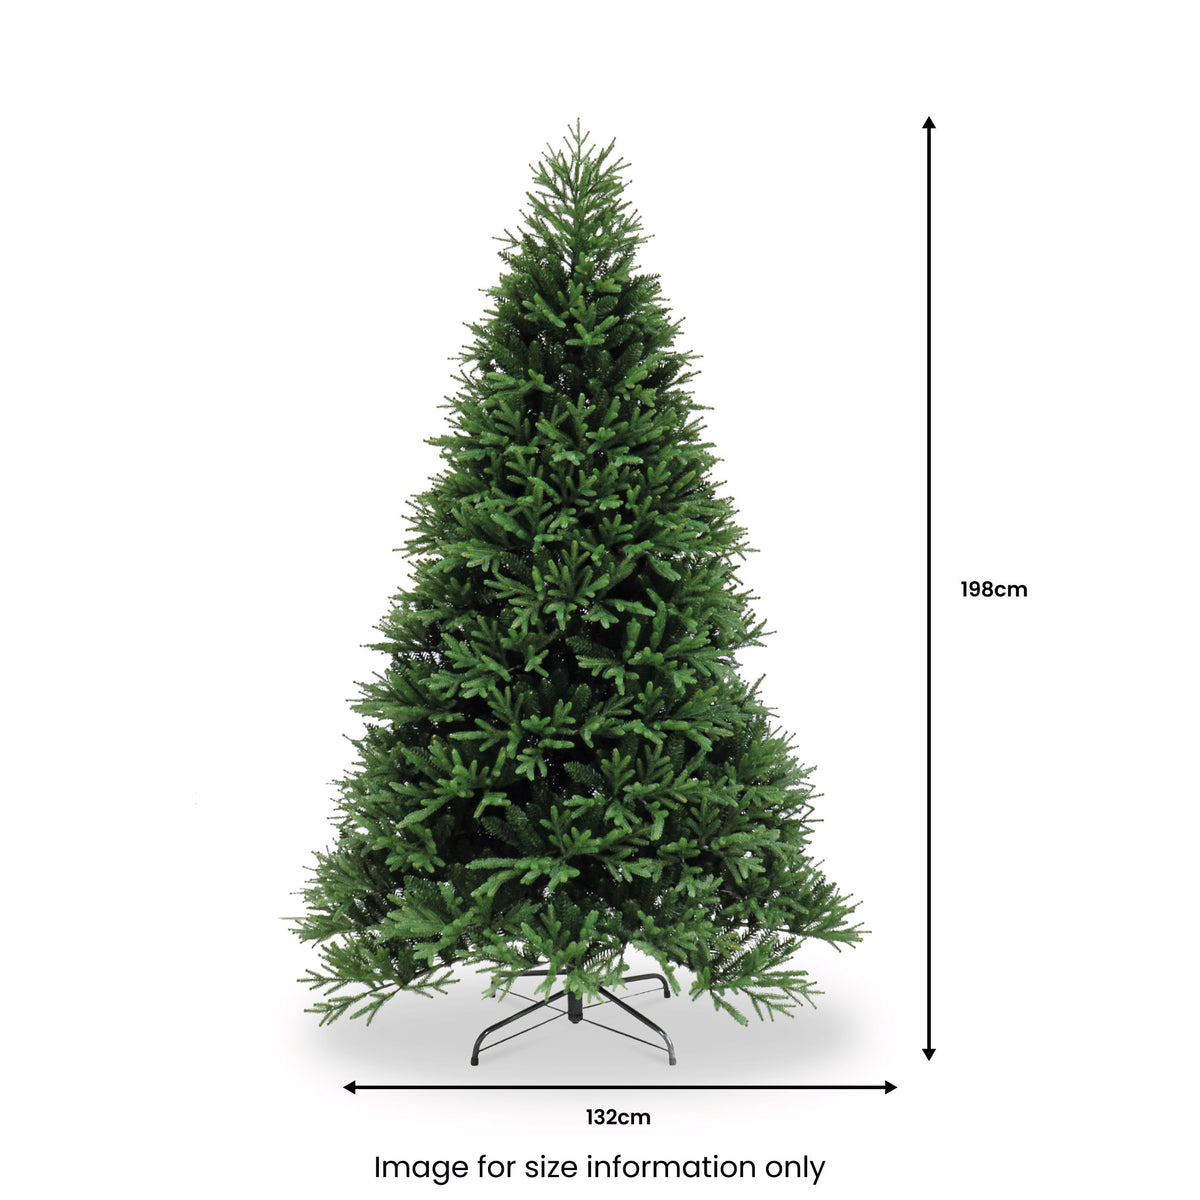 Royal Fir 6.5ft Christmas Tree from Roseland